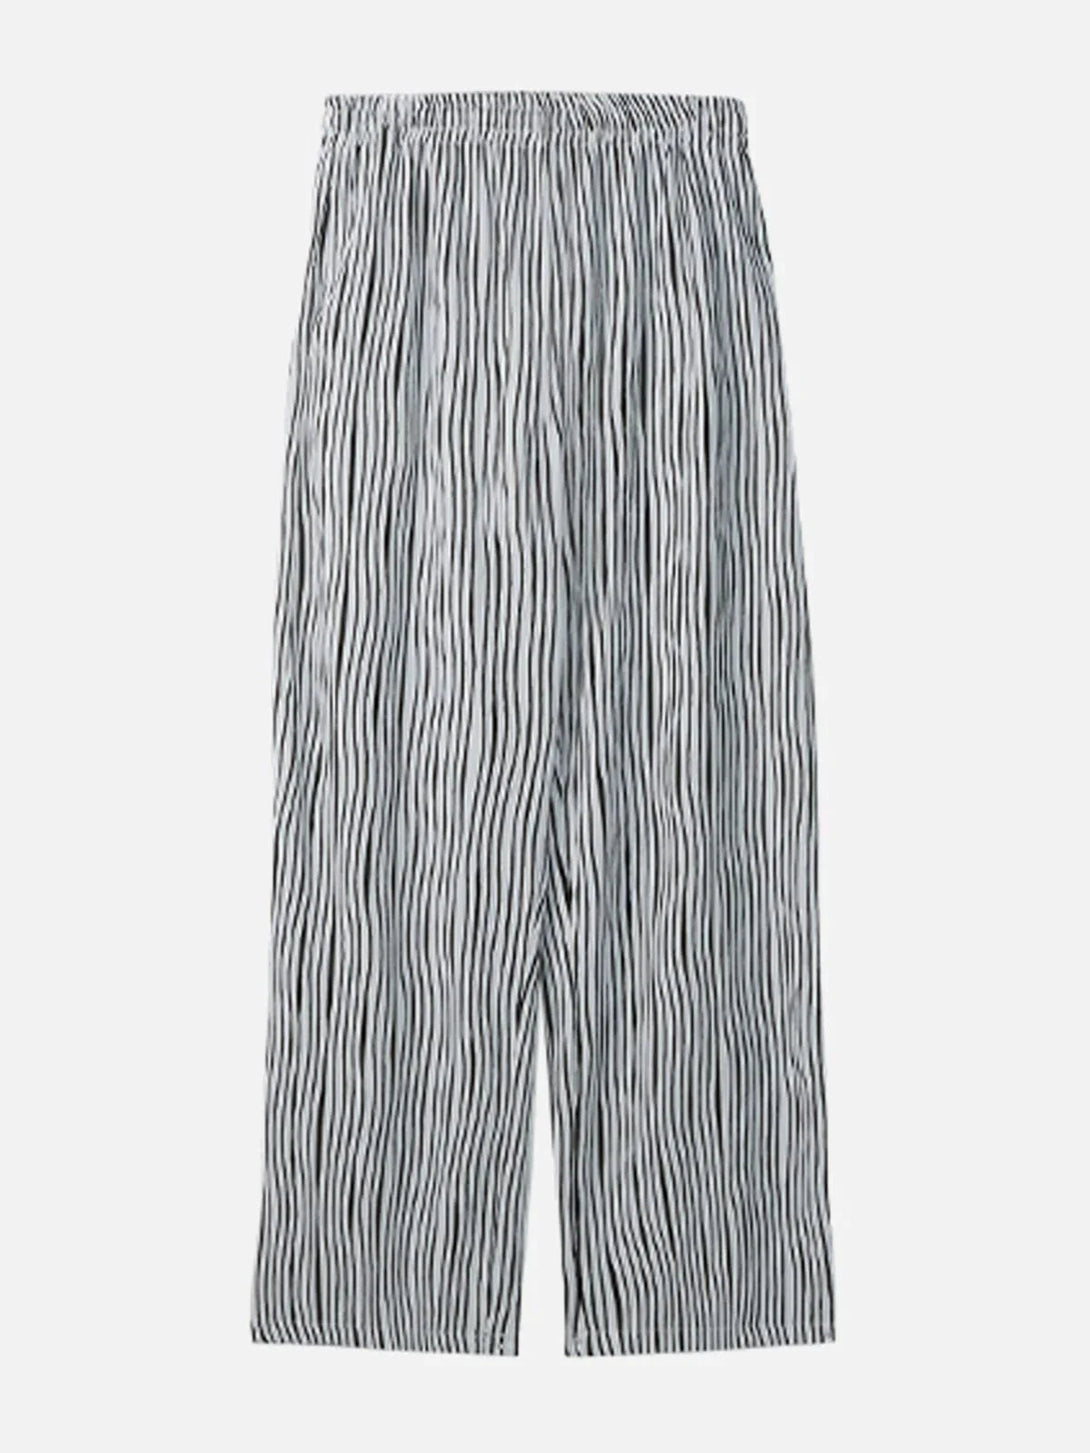 Majesda® - Zebra Pattern Pants outfit ideas streetwear fashion